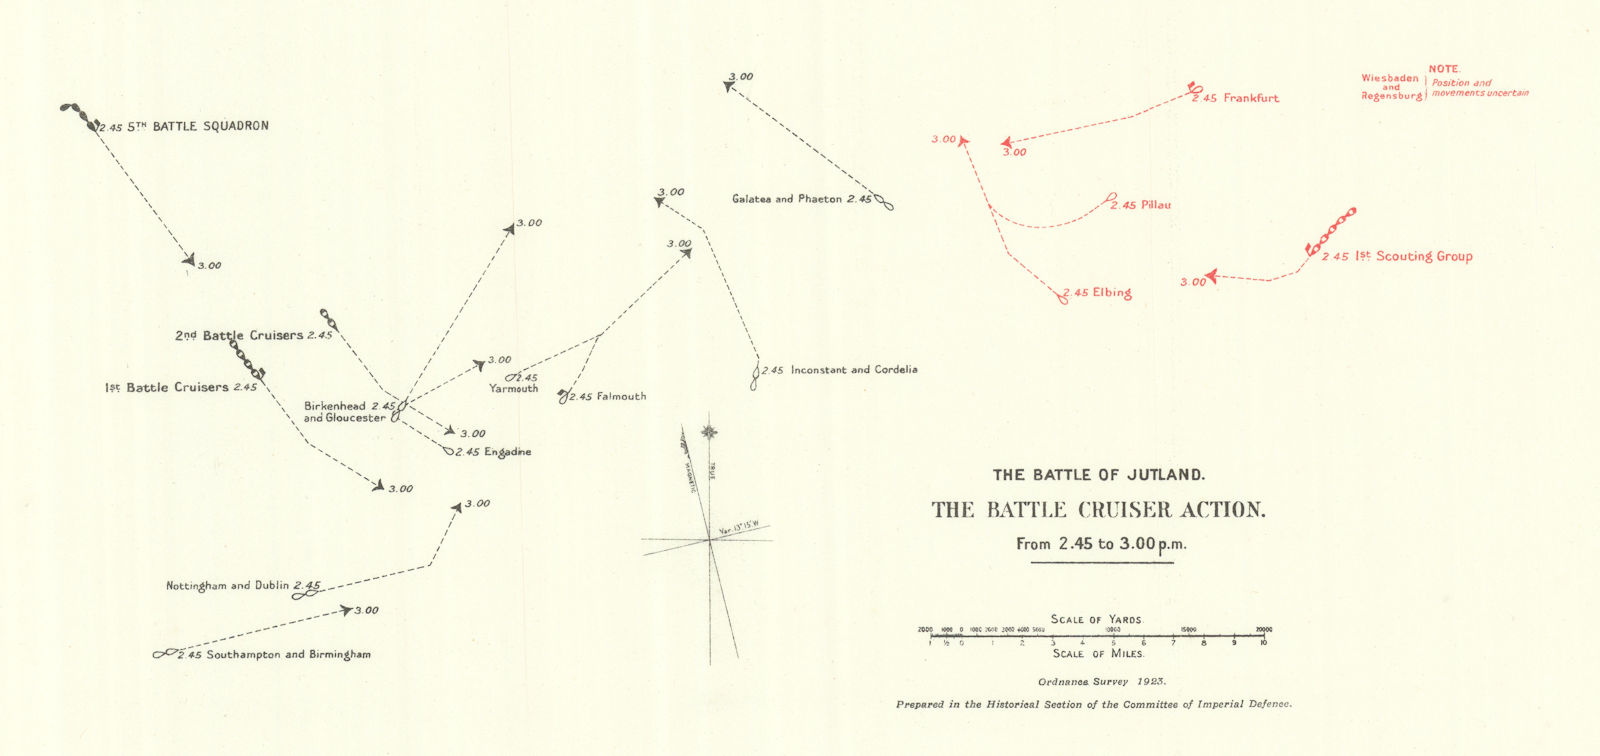 Battle of Jutland. Battle Cruiser Action 2.45-3.00 pm 31 May 1916. WW1. 1923 map